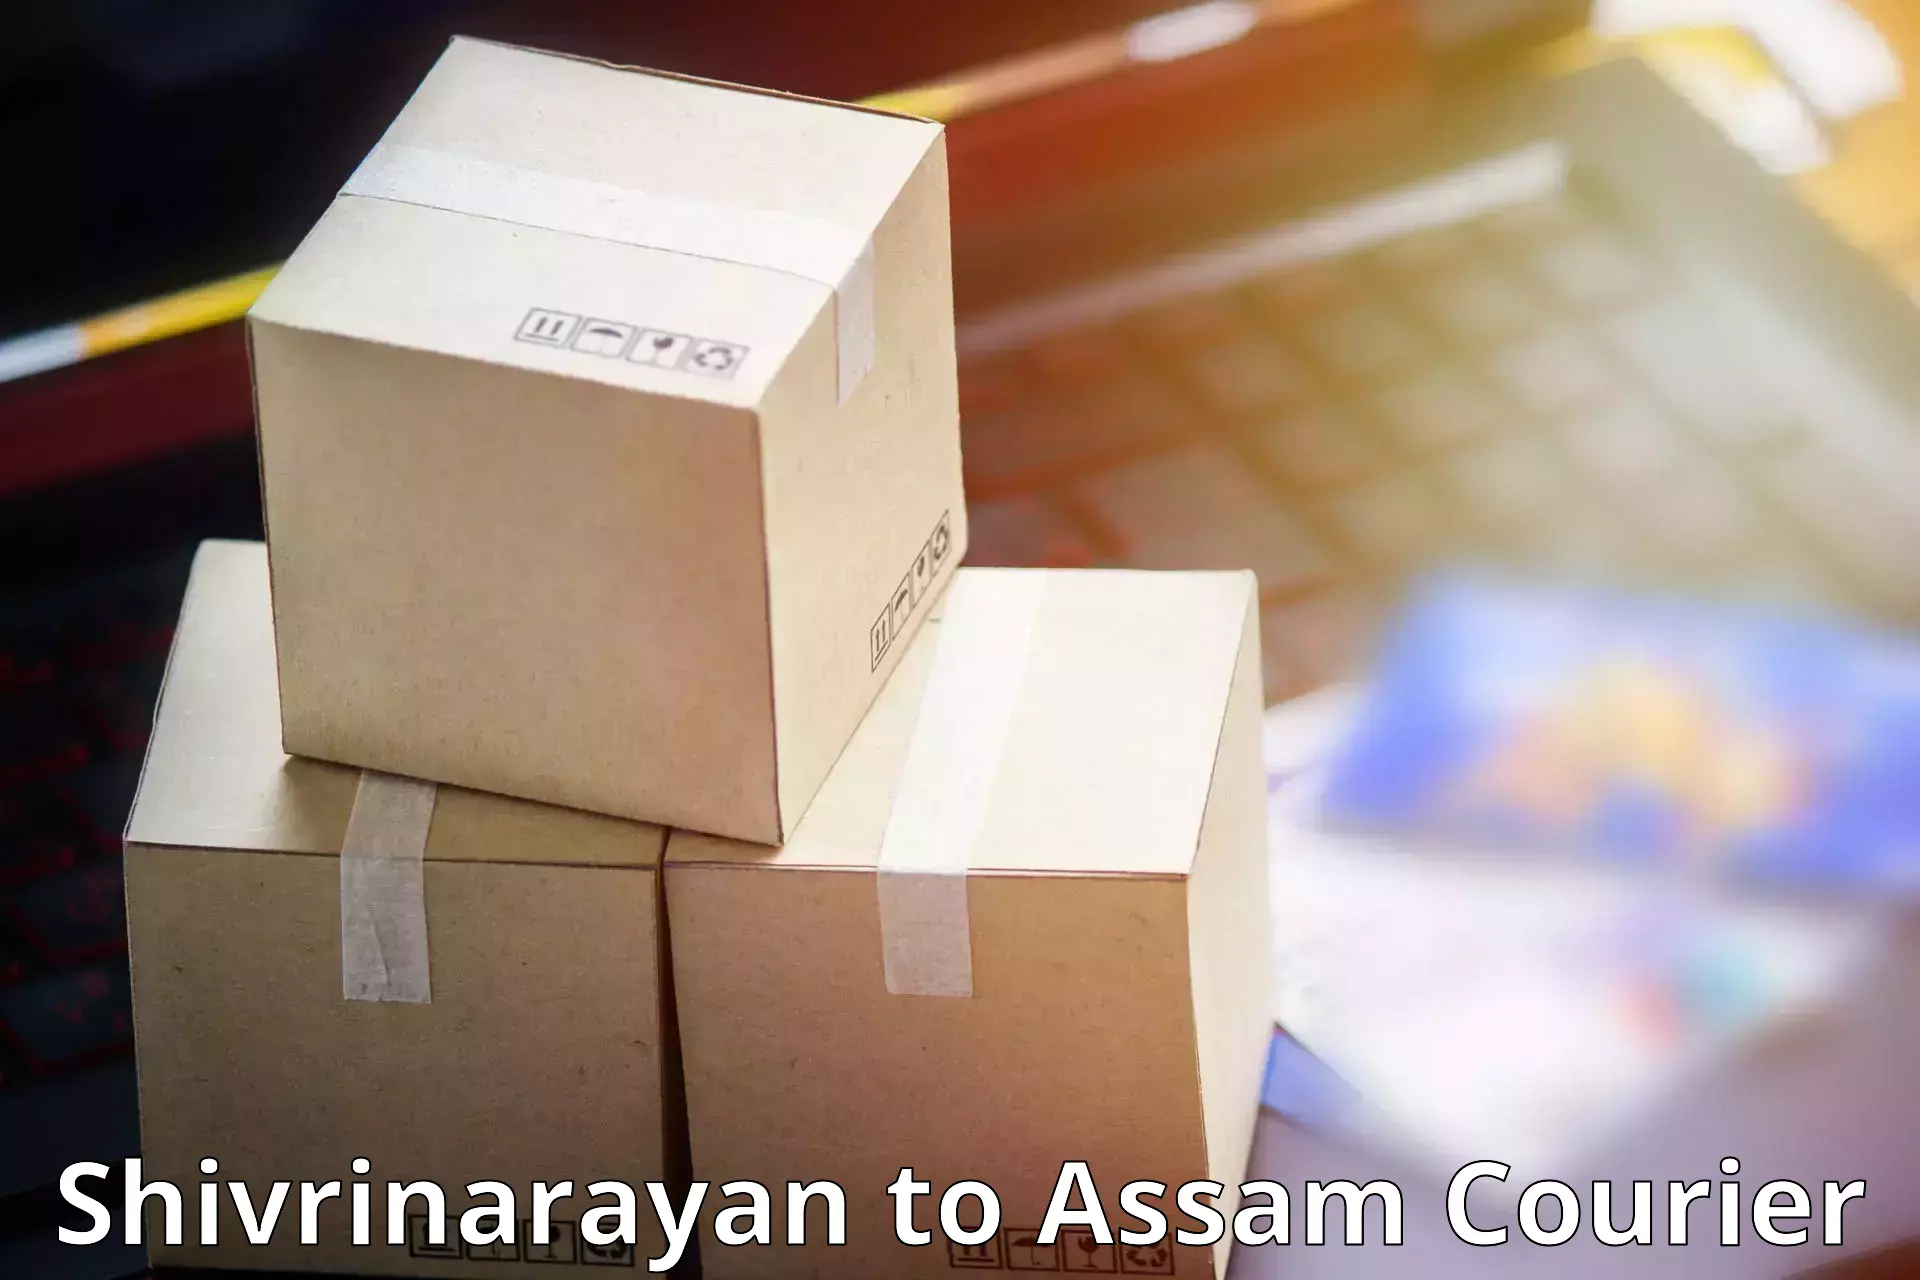 Courier service comparison Shivrinarayan to Mayang